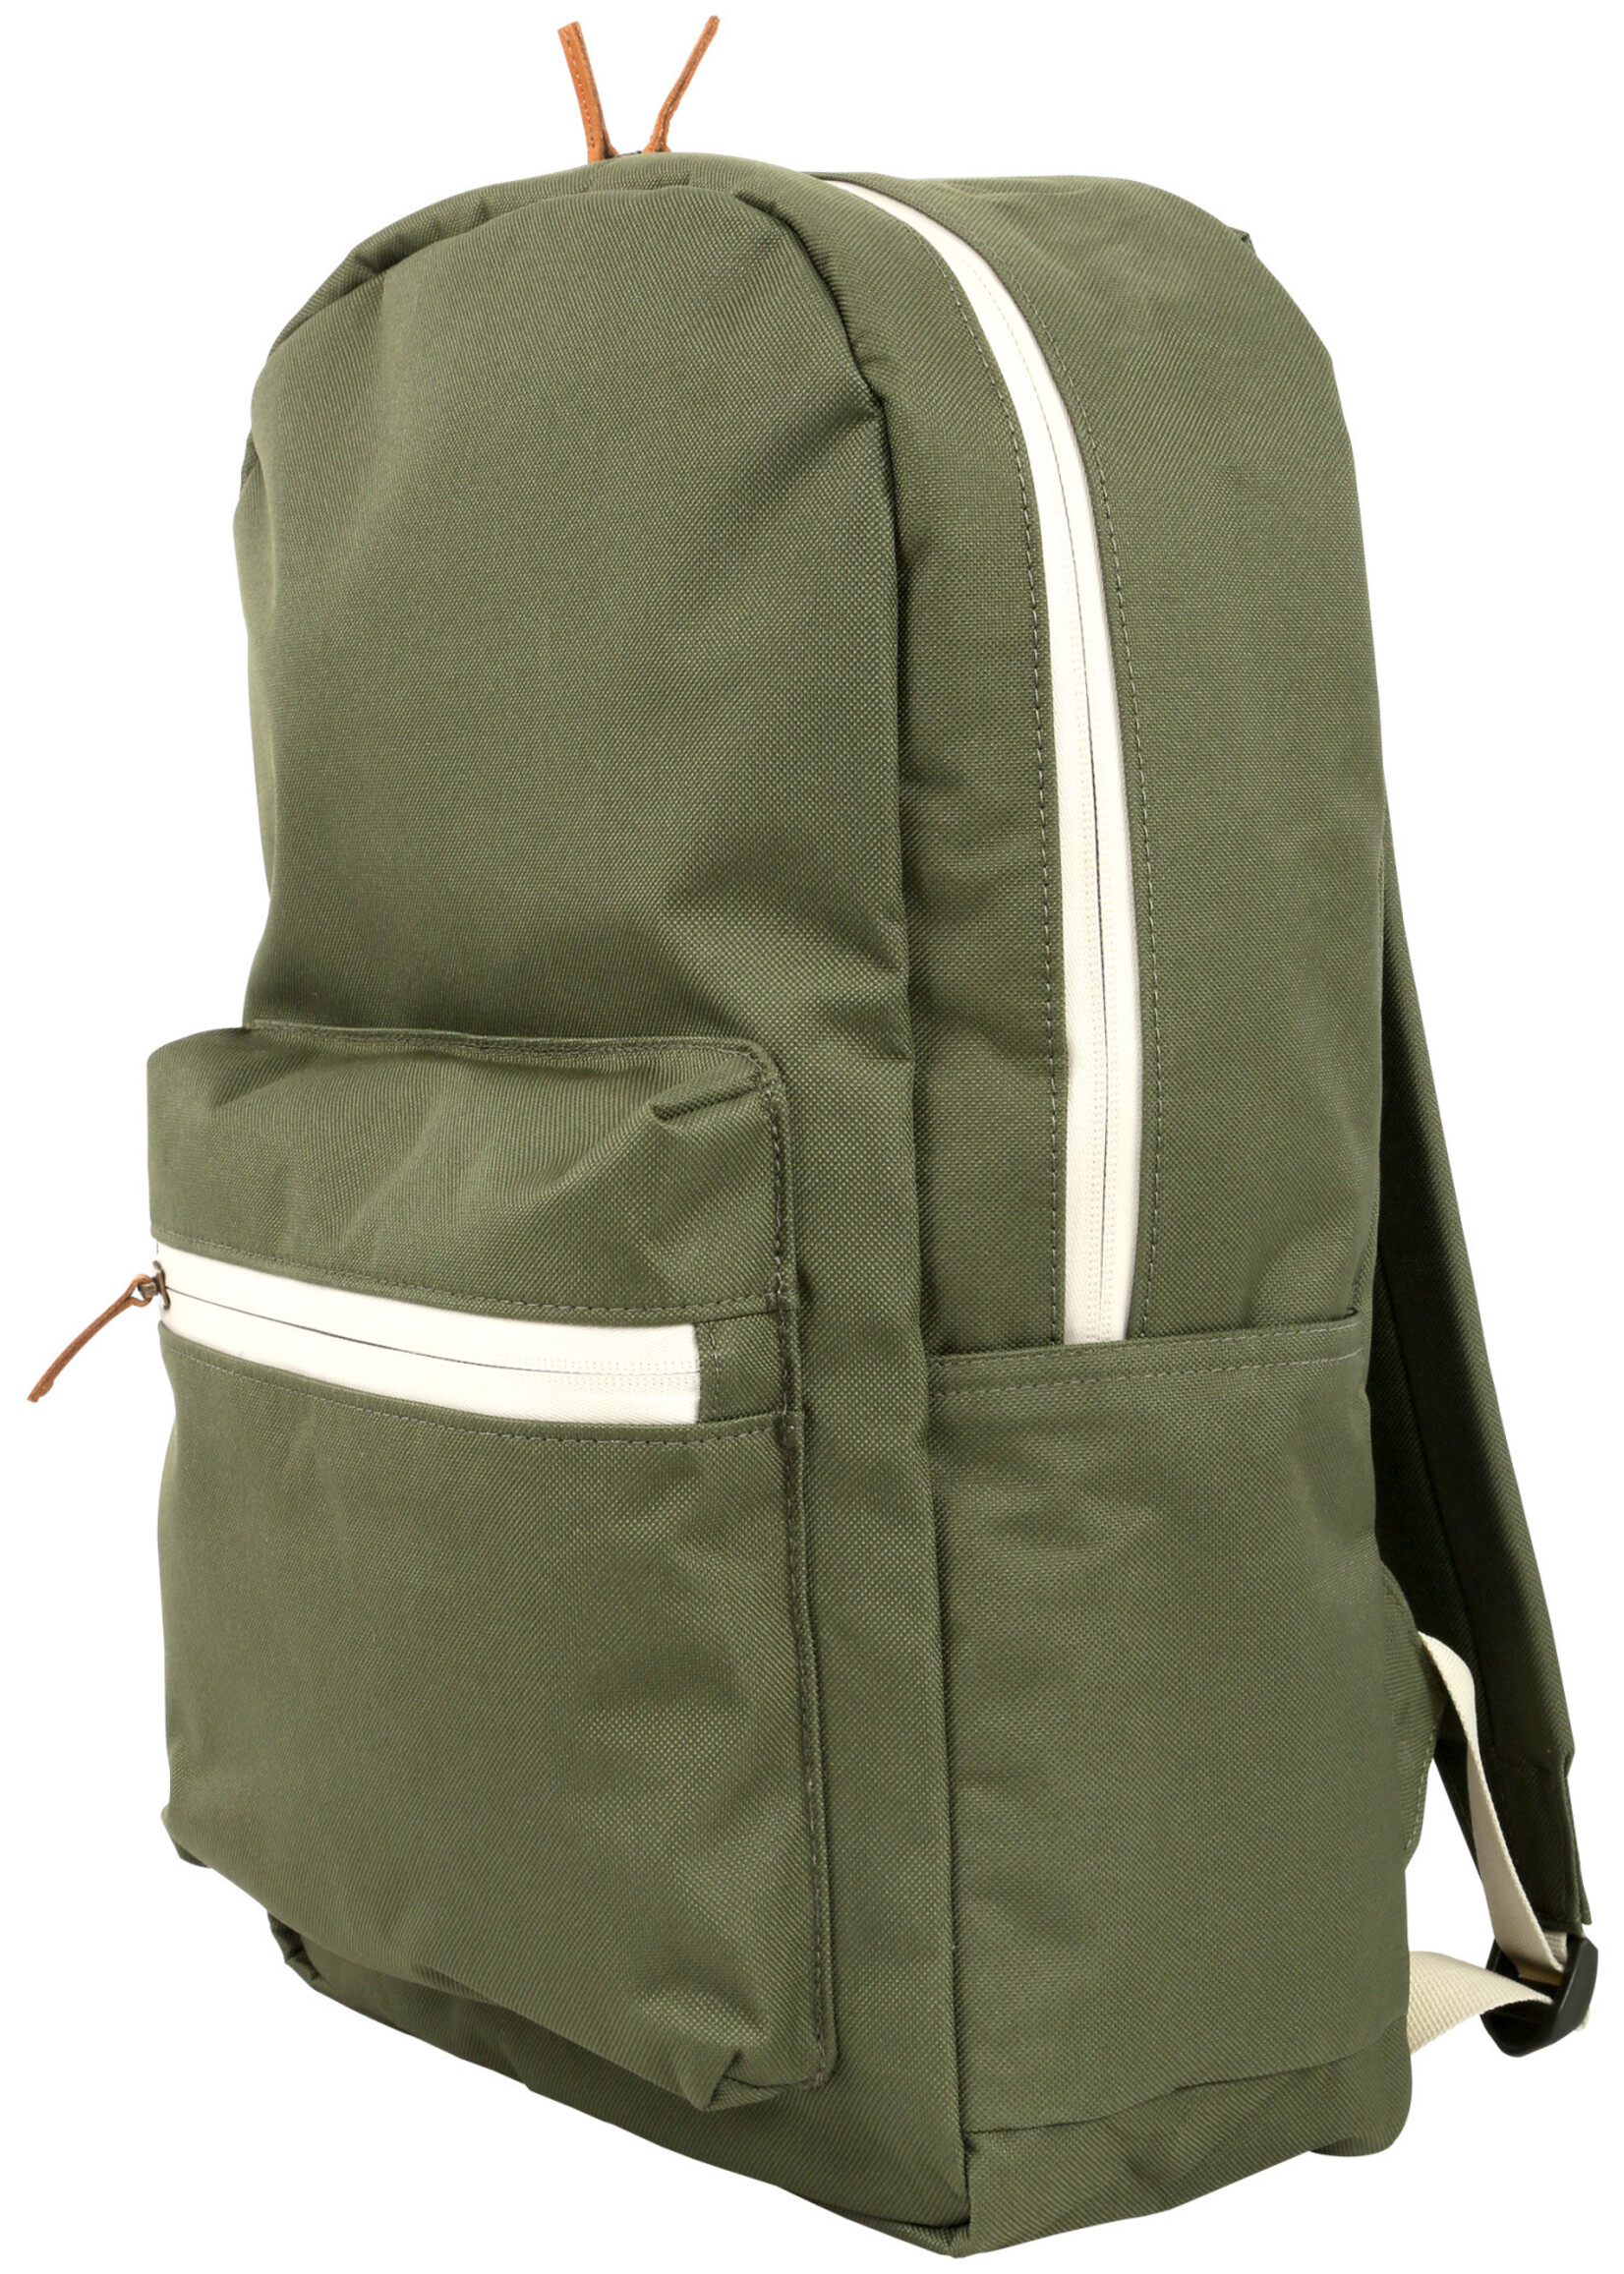 TRAP TRAP Backpack - Olive